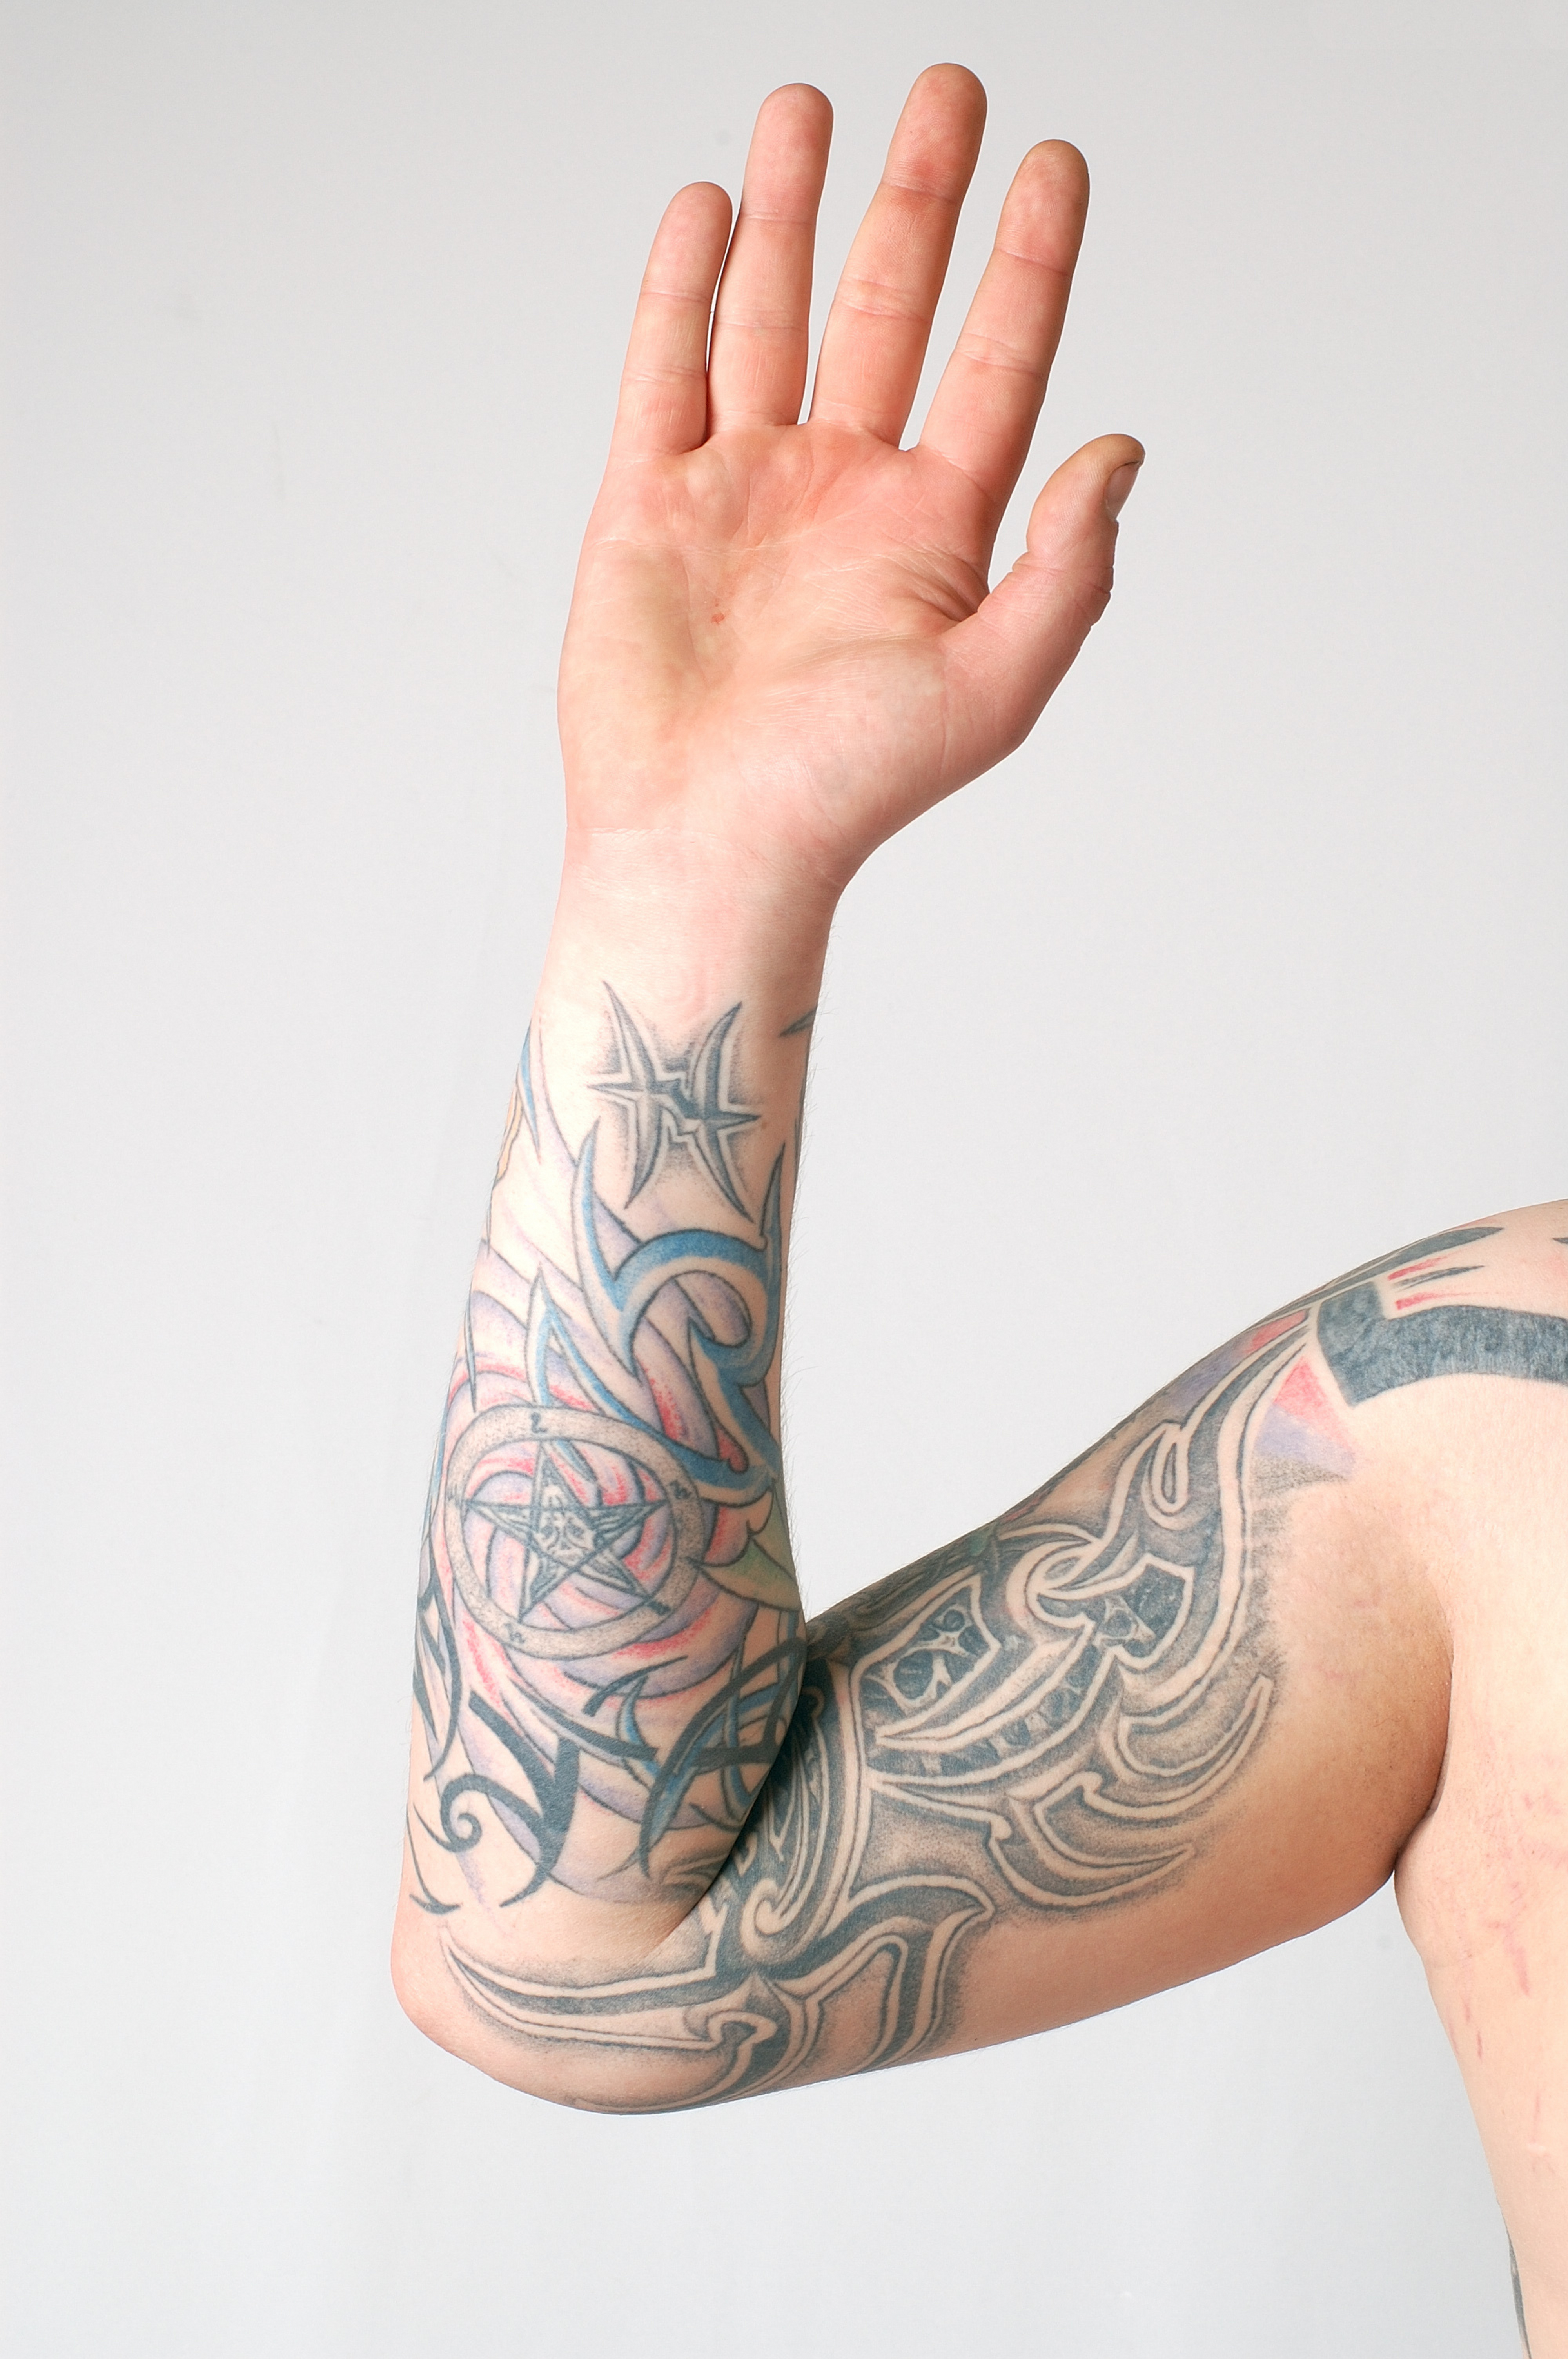 Tattoo Removal Training | Laser Tattoo Removal | NLI